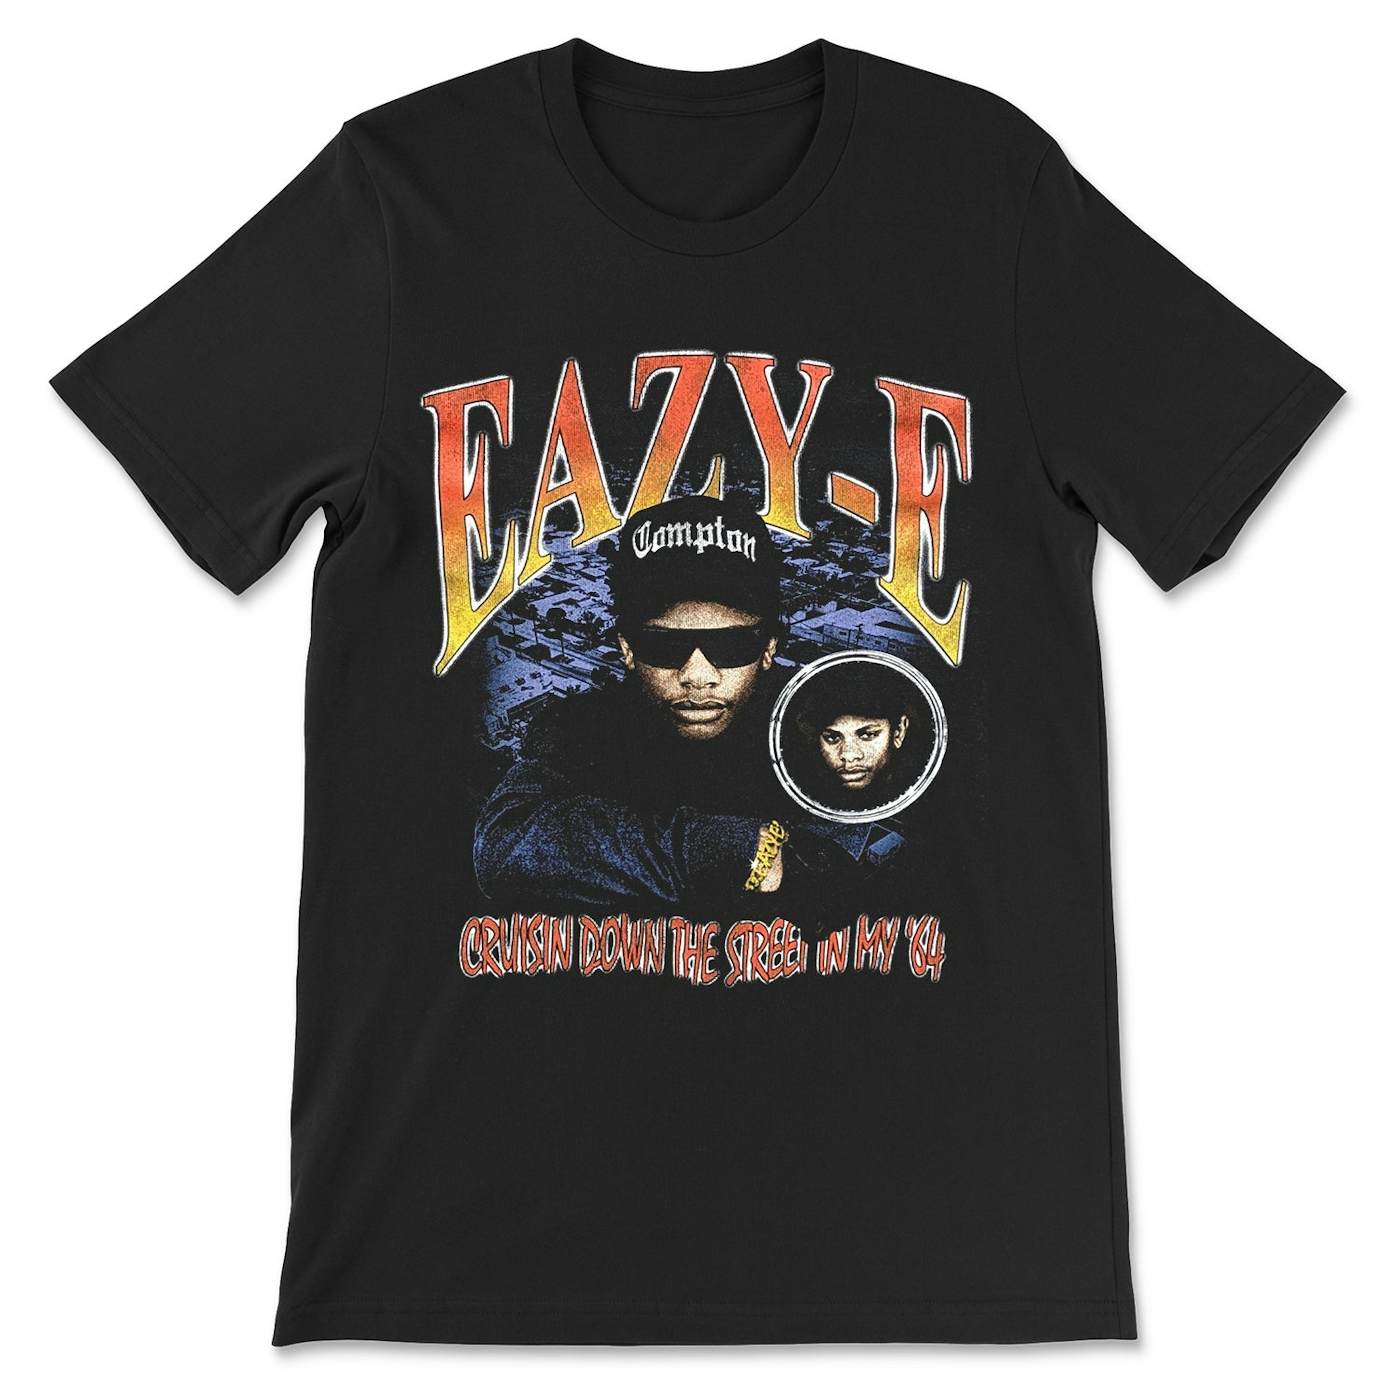 Eazy-E "Cruisin Down The Street In My 64" T-Shirt